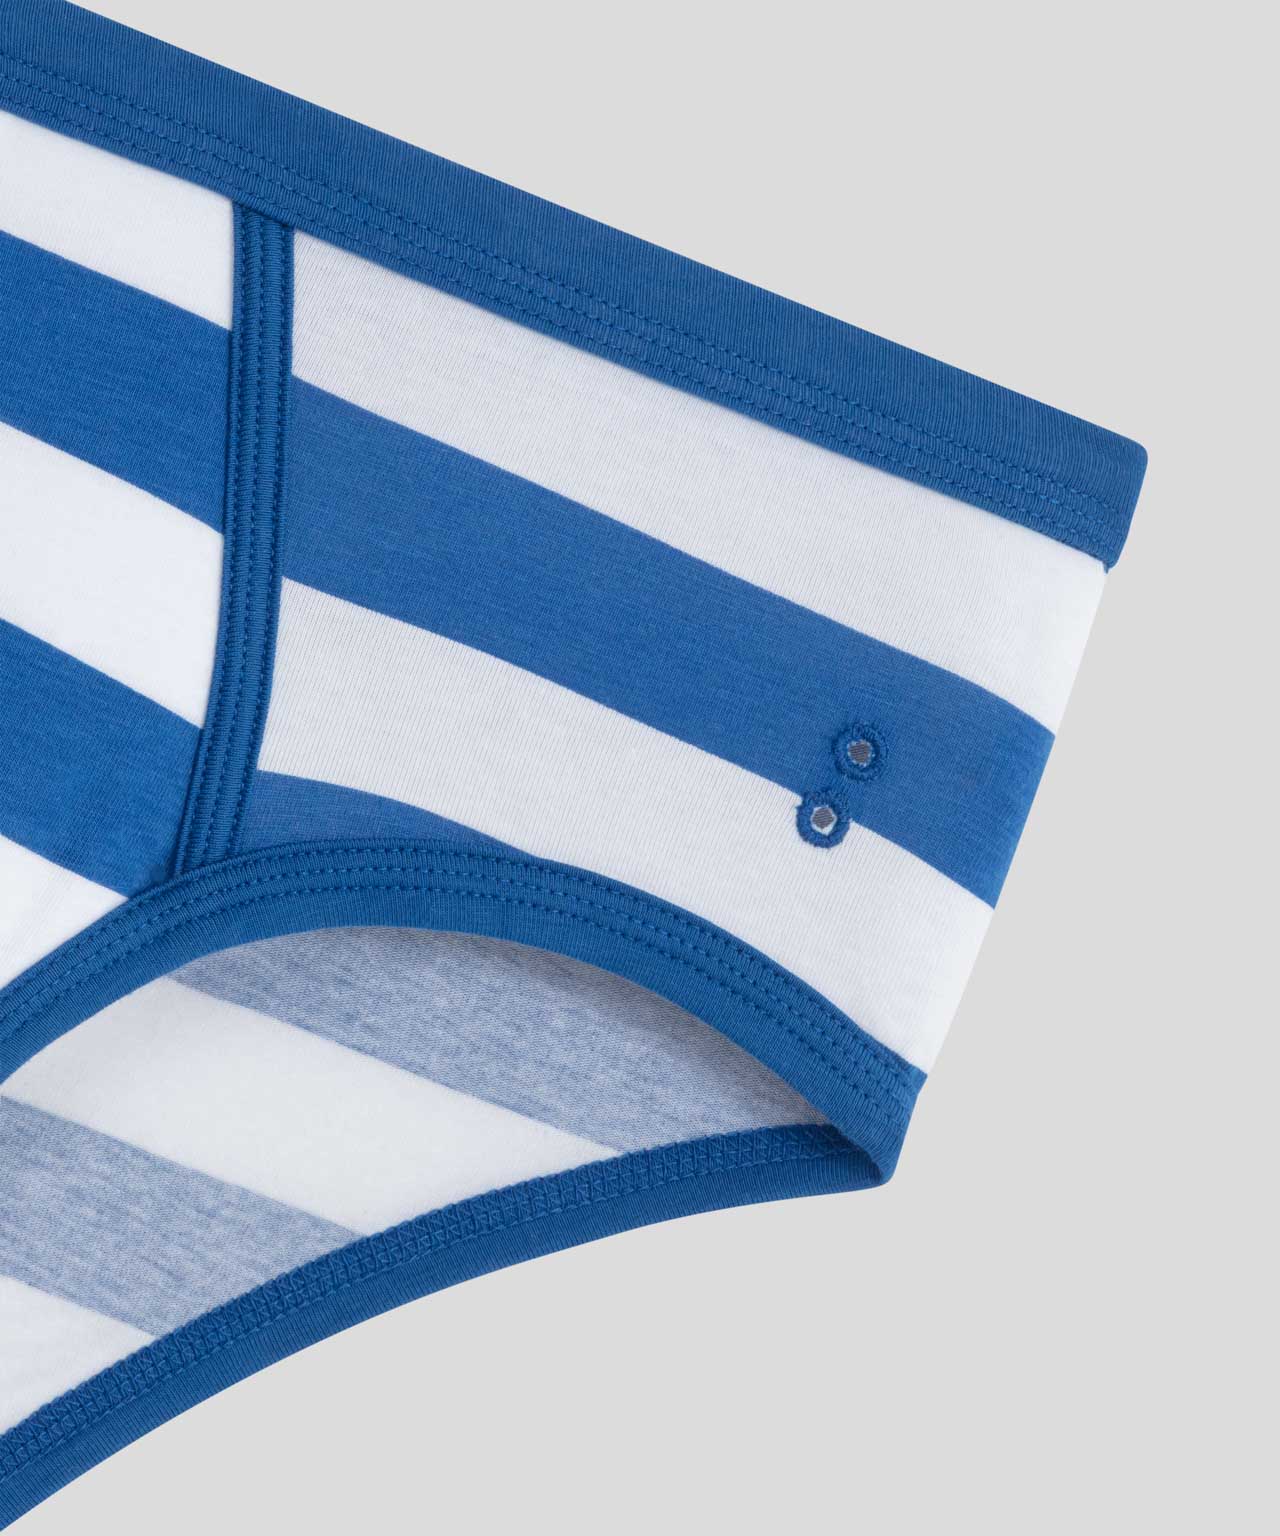 Y-Front Briefs Wide Stripes: Greek Blue / White